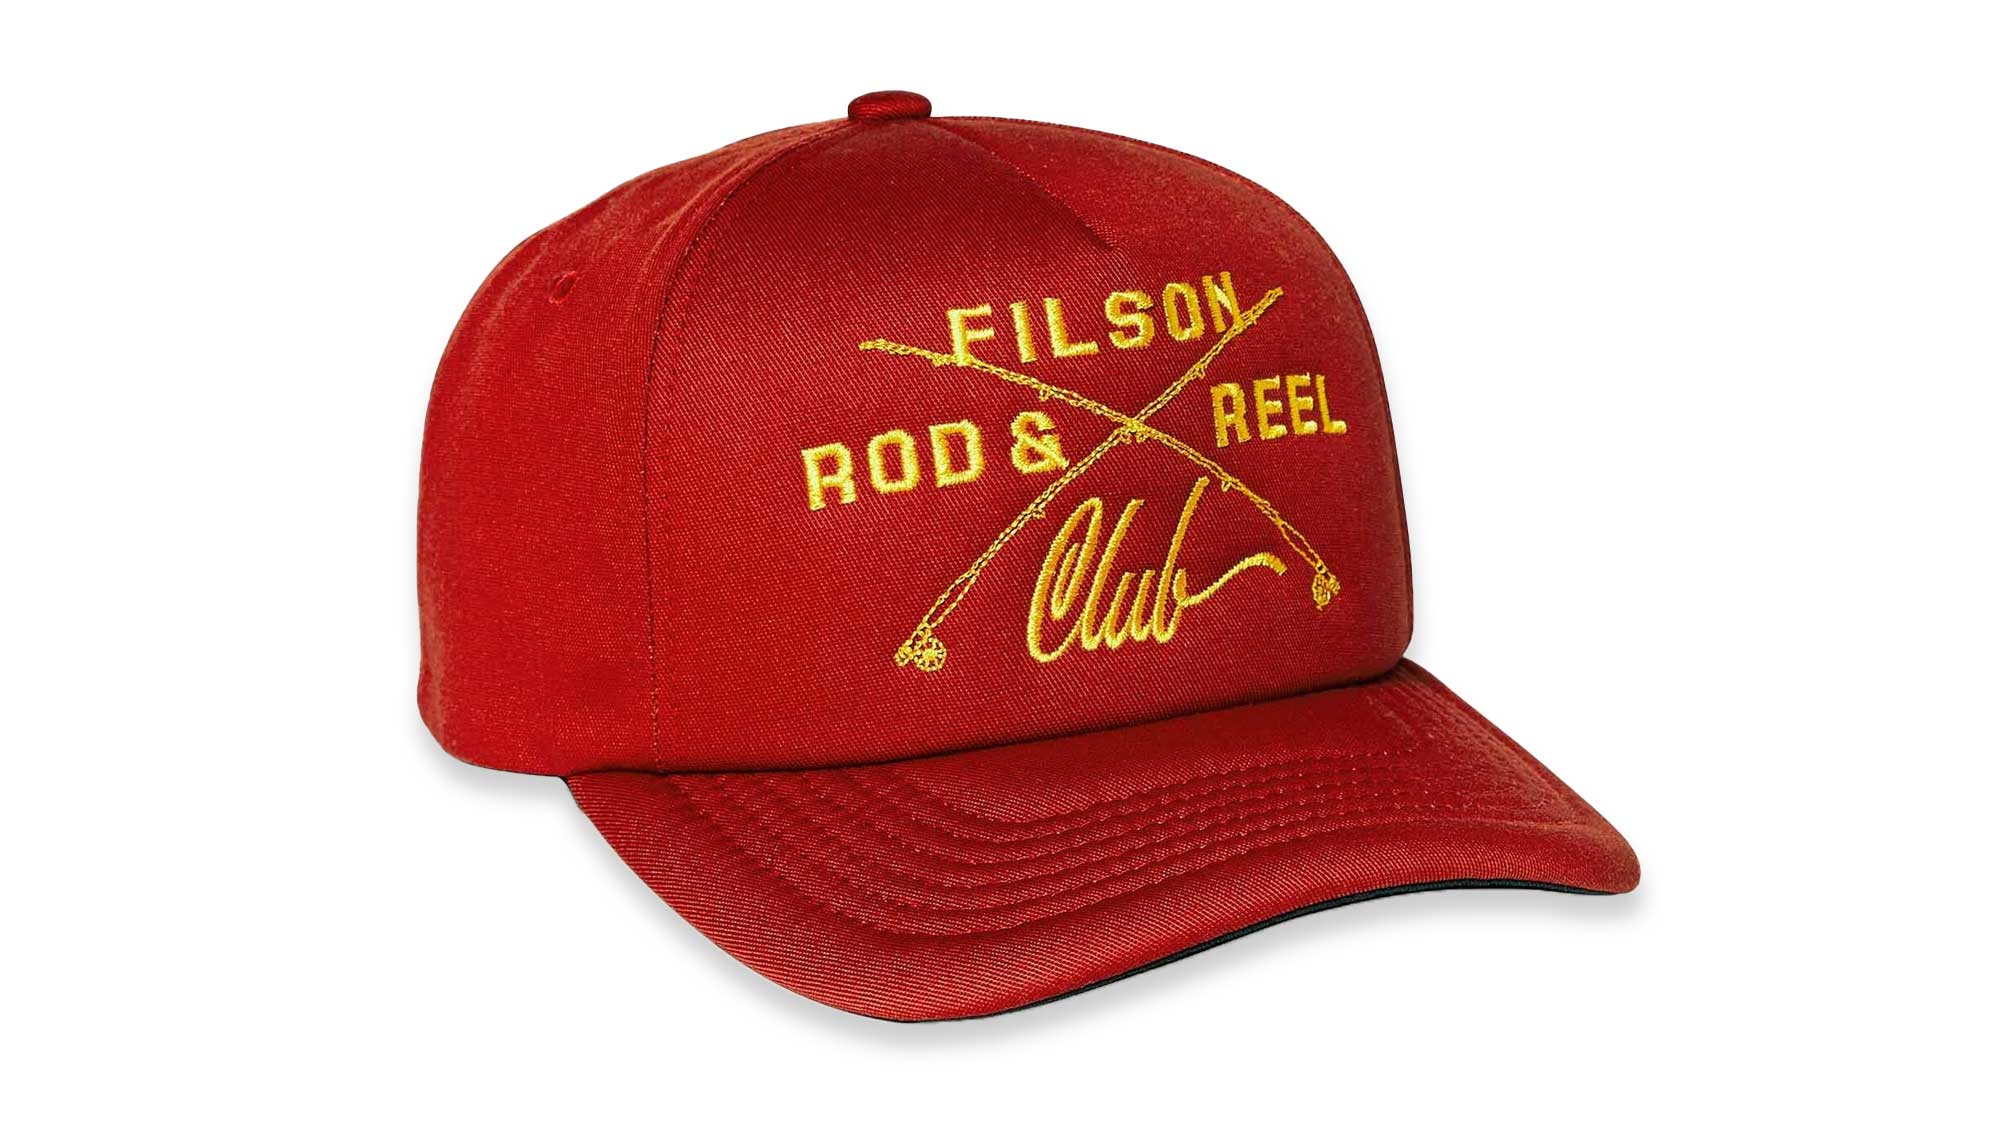 Mesh Harvester Cap Rod and Reel Club